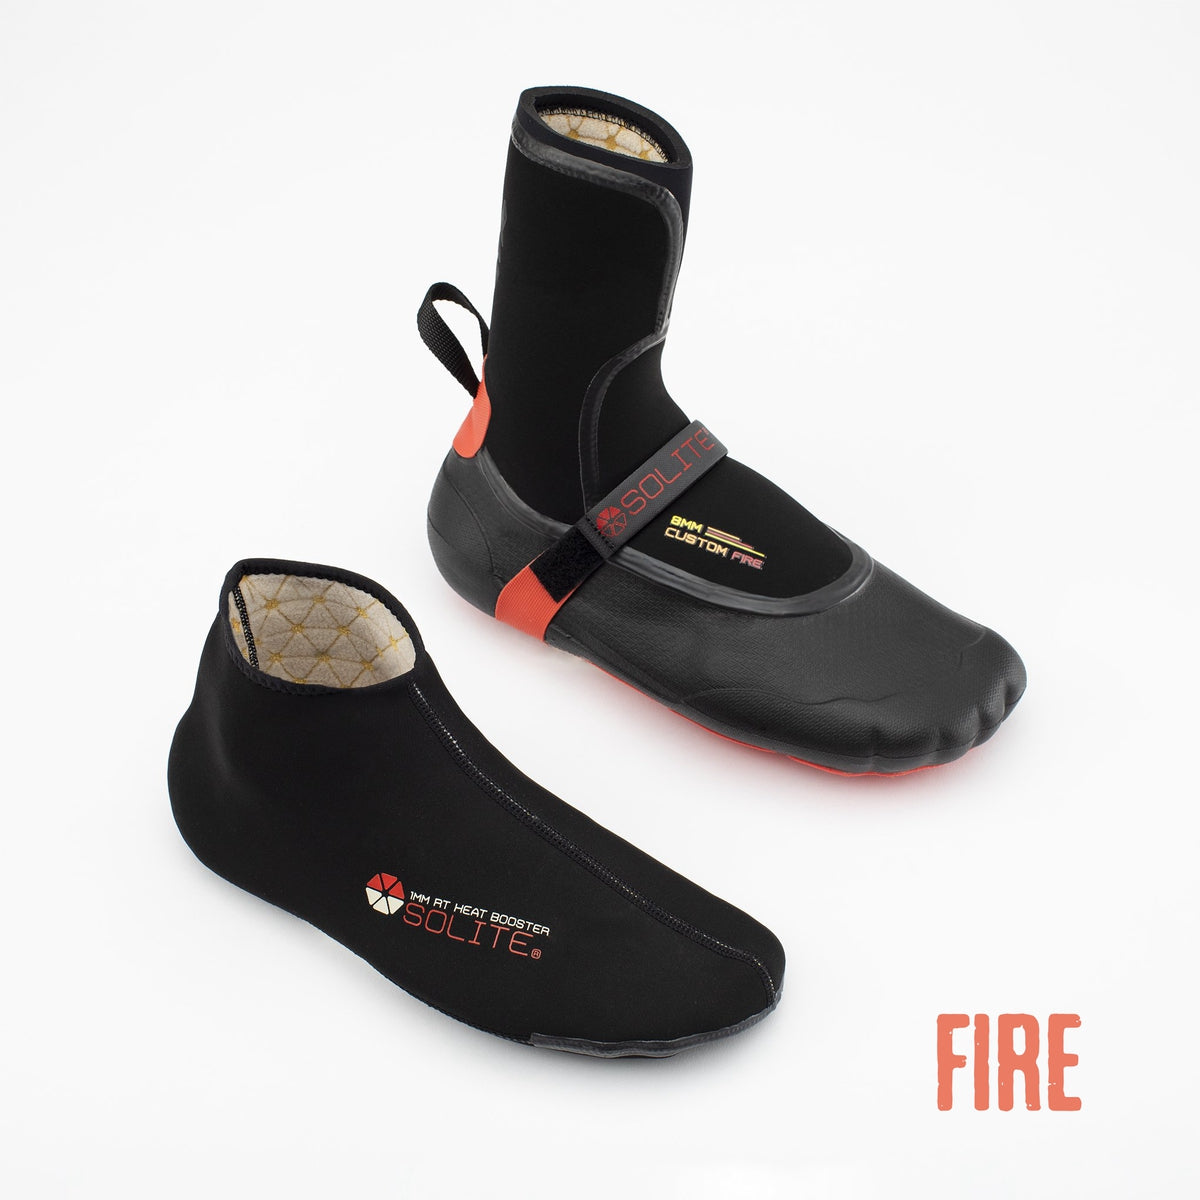 
                  
                    Booties 8mm SOLITE Custom Fire (Black/Red) - Includes 1mm Neoprene Heat Booster Socks
                  
                